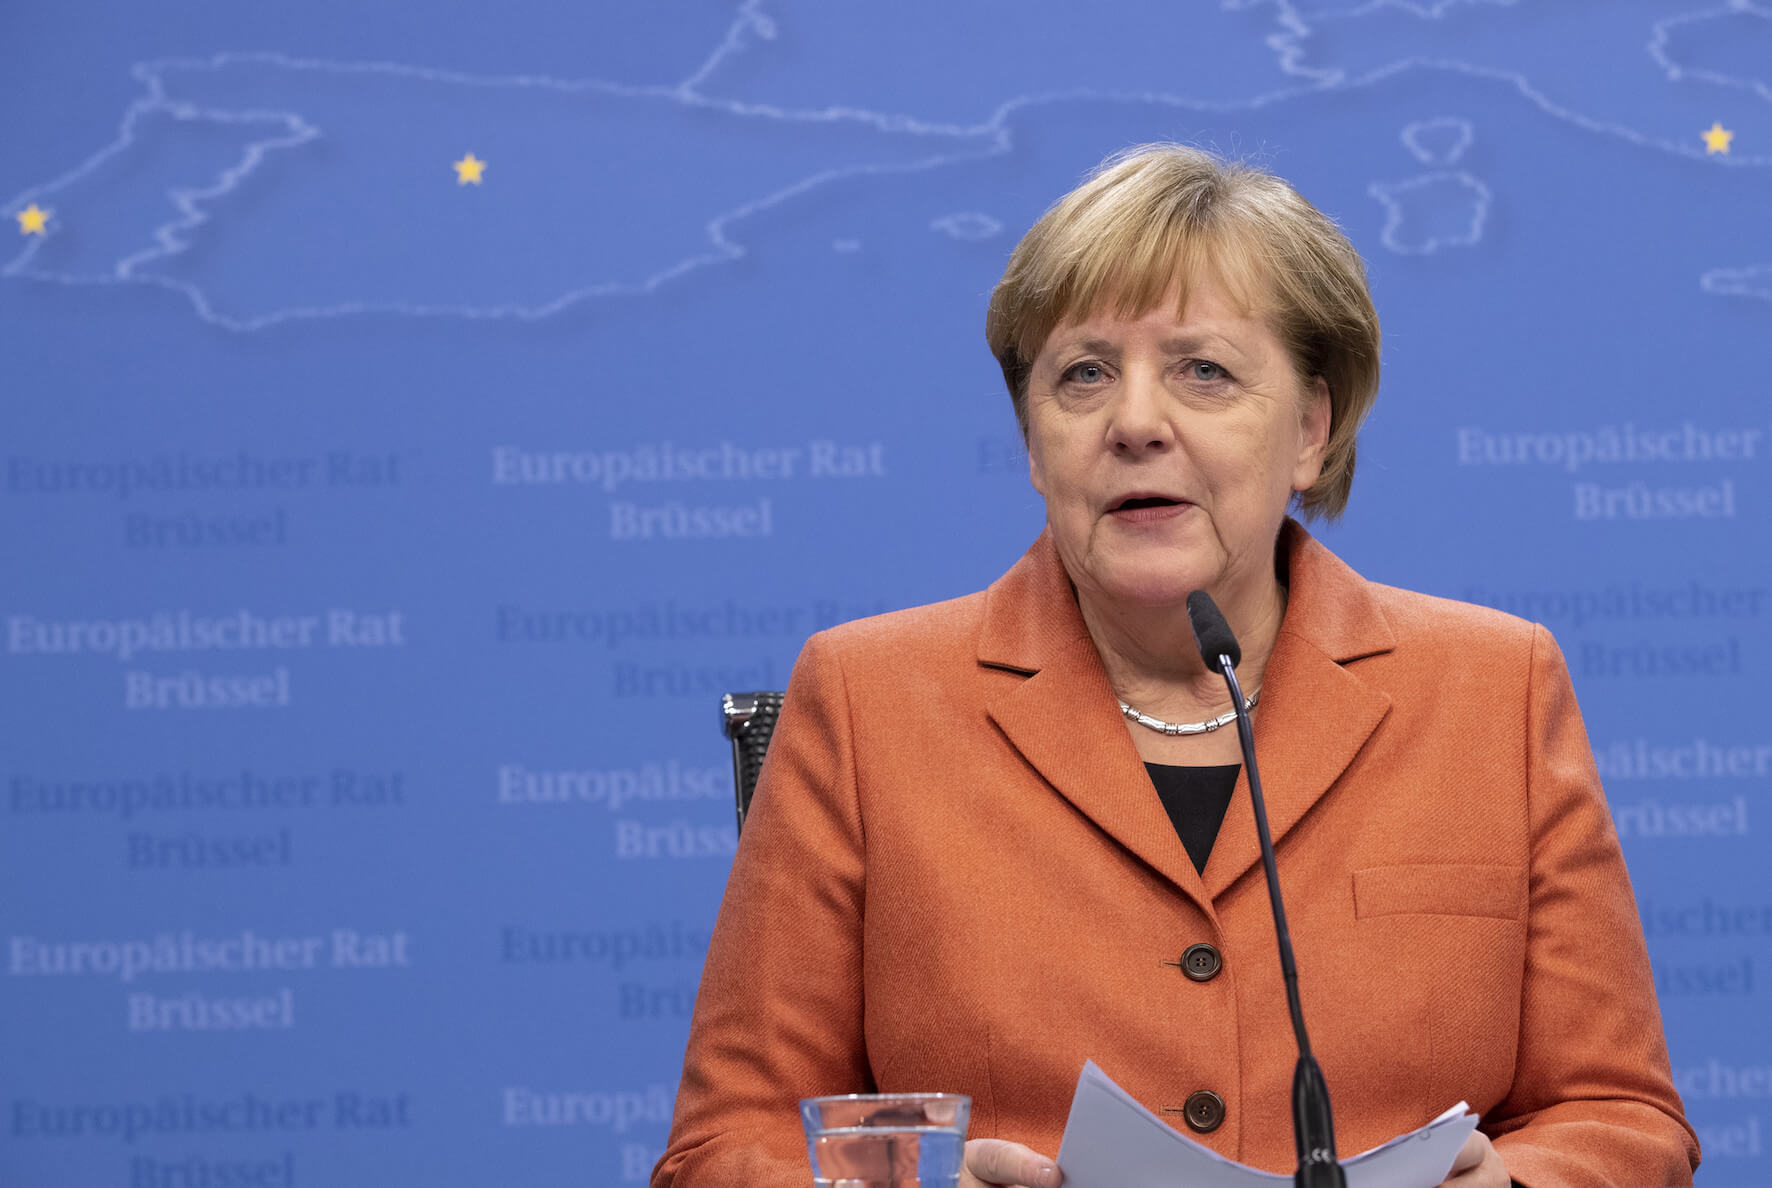 Belgium, Brussels: German Chancellor Angela Merkel